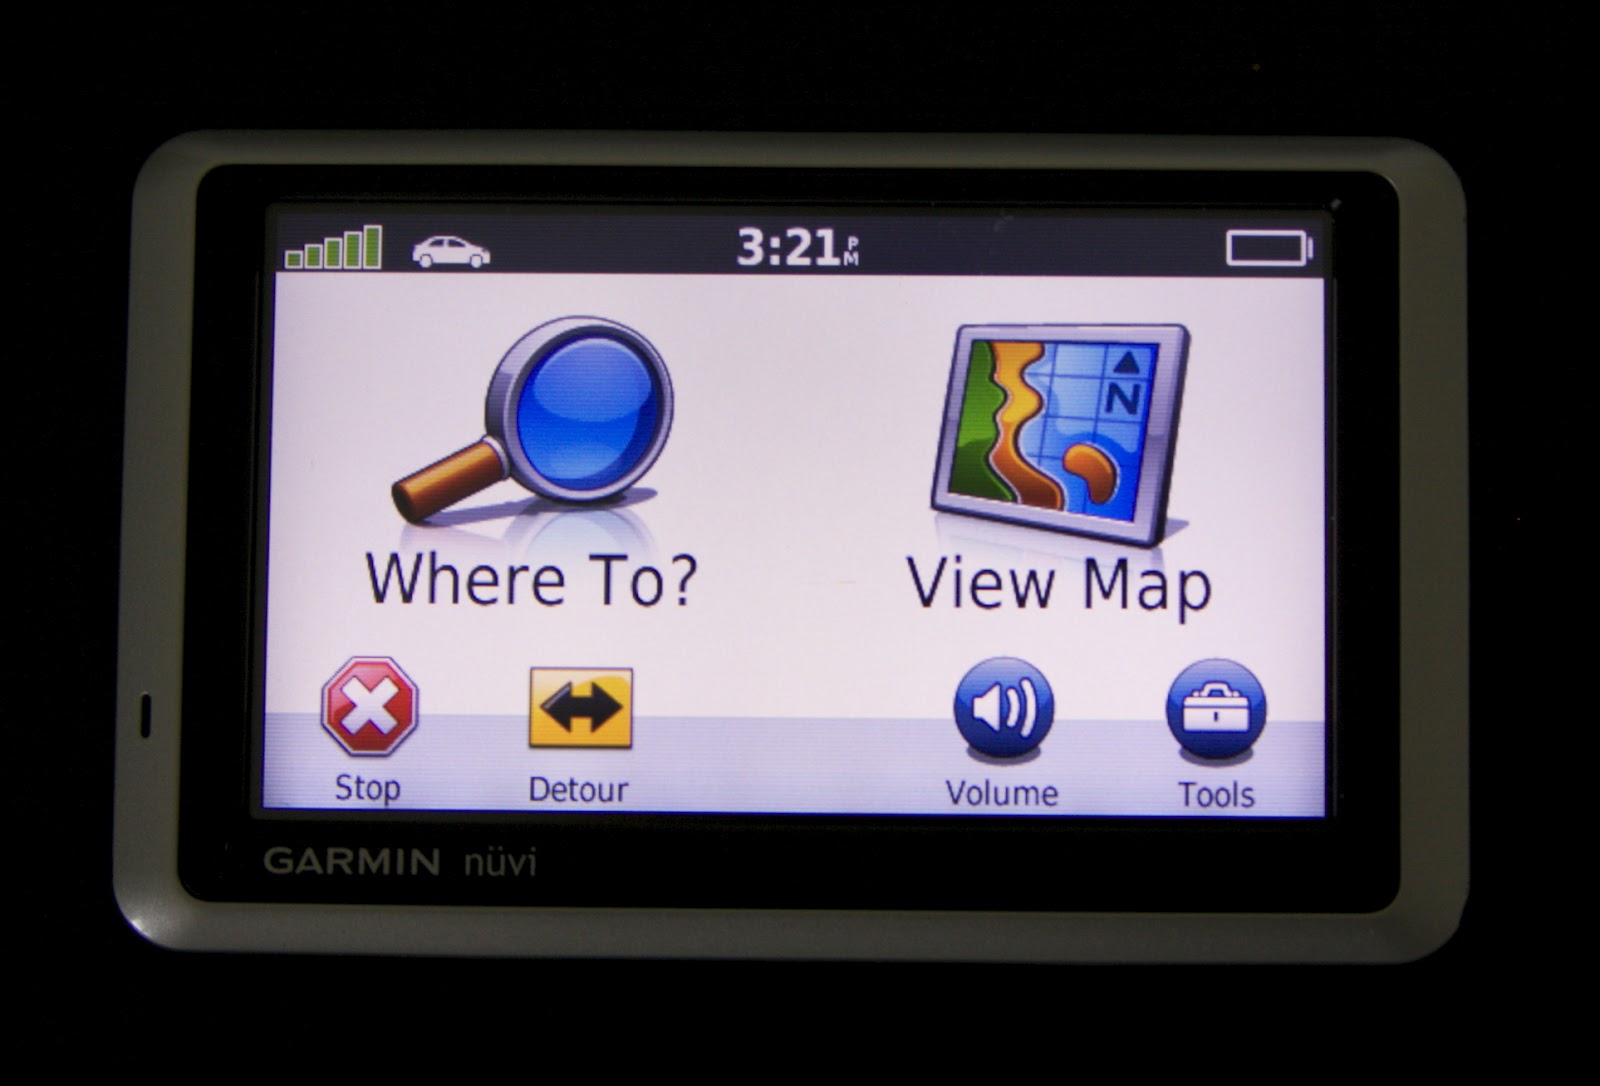 GPSTravelMaps.com: Adding Destination in a Garmin Device